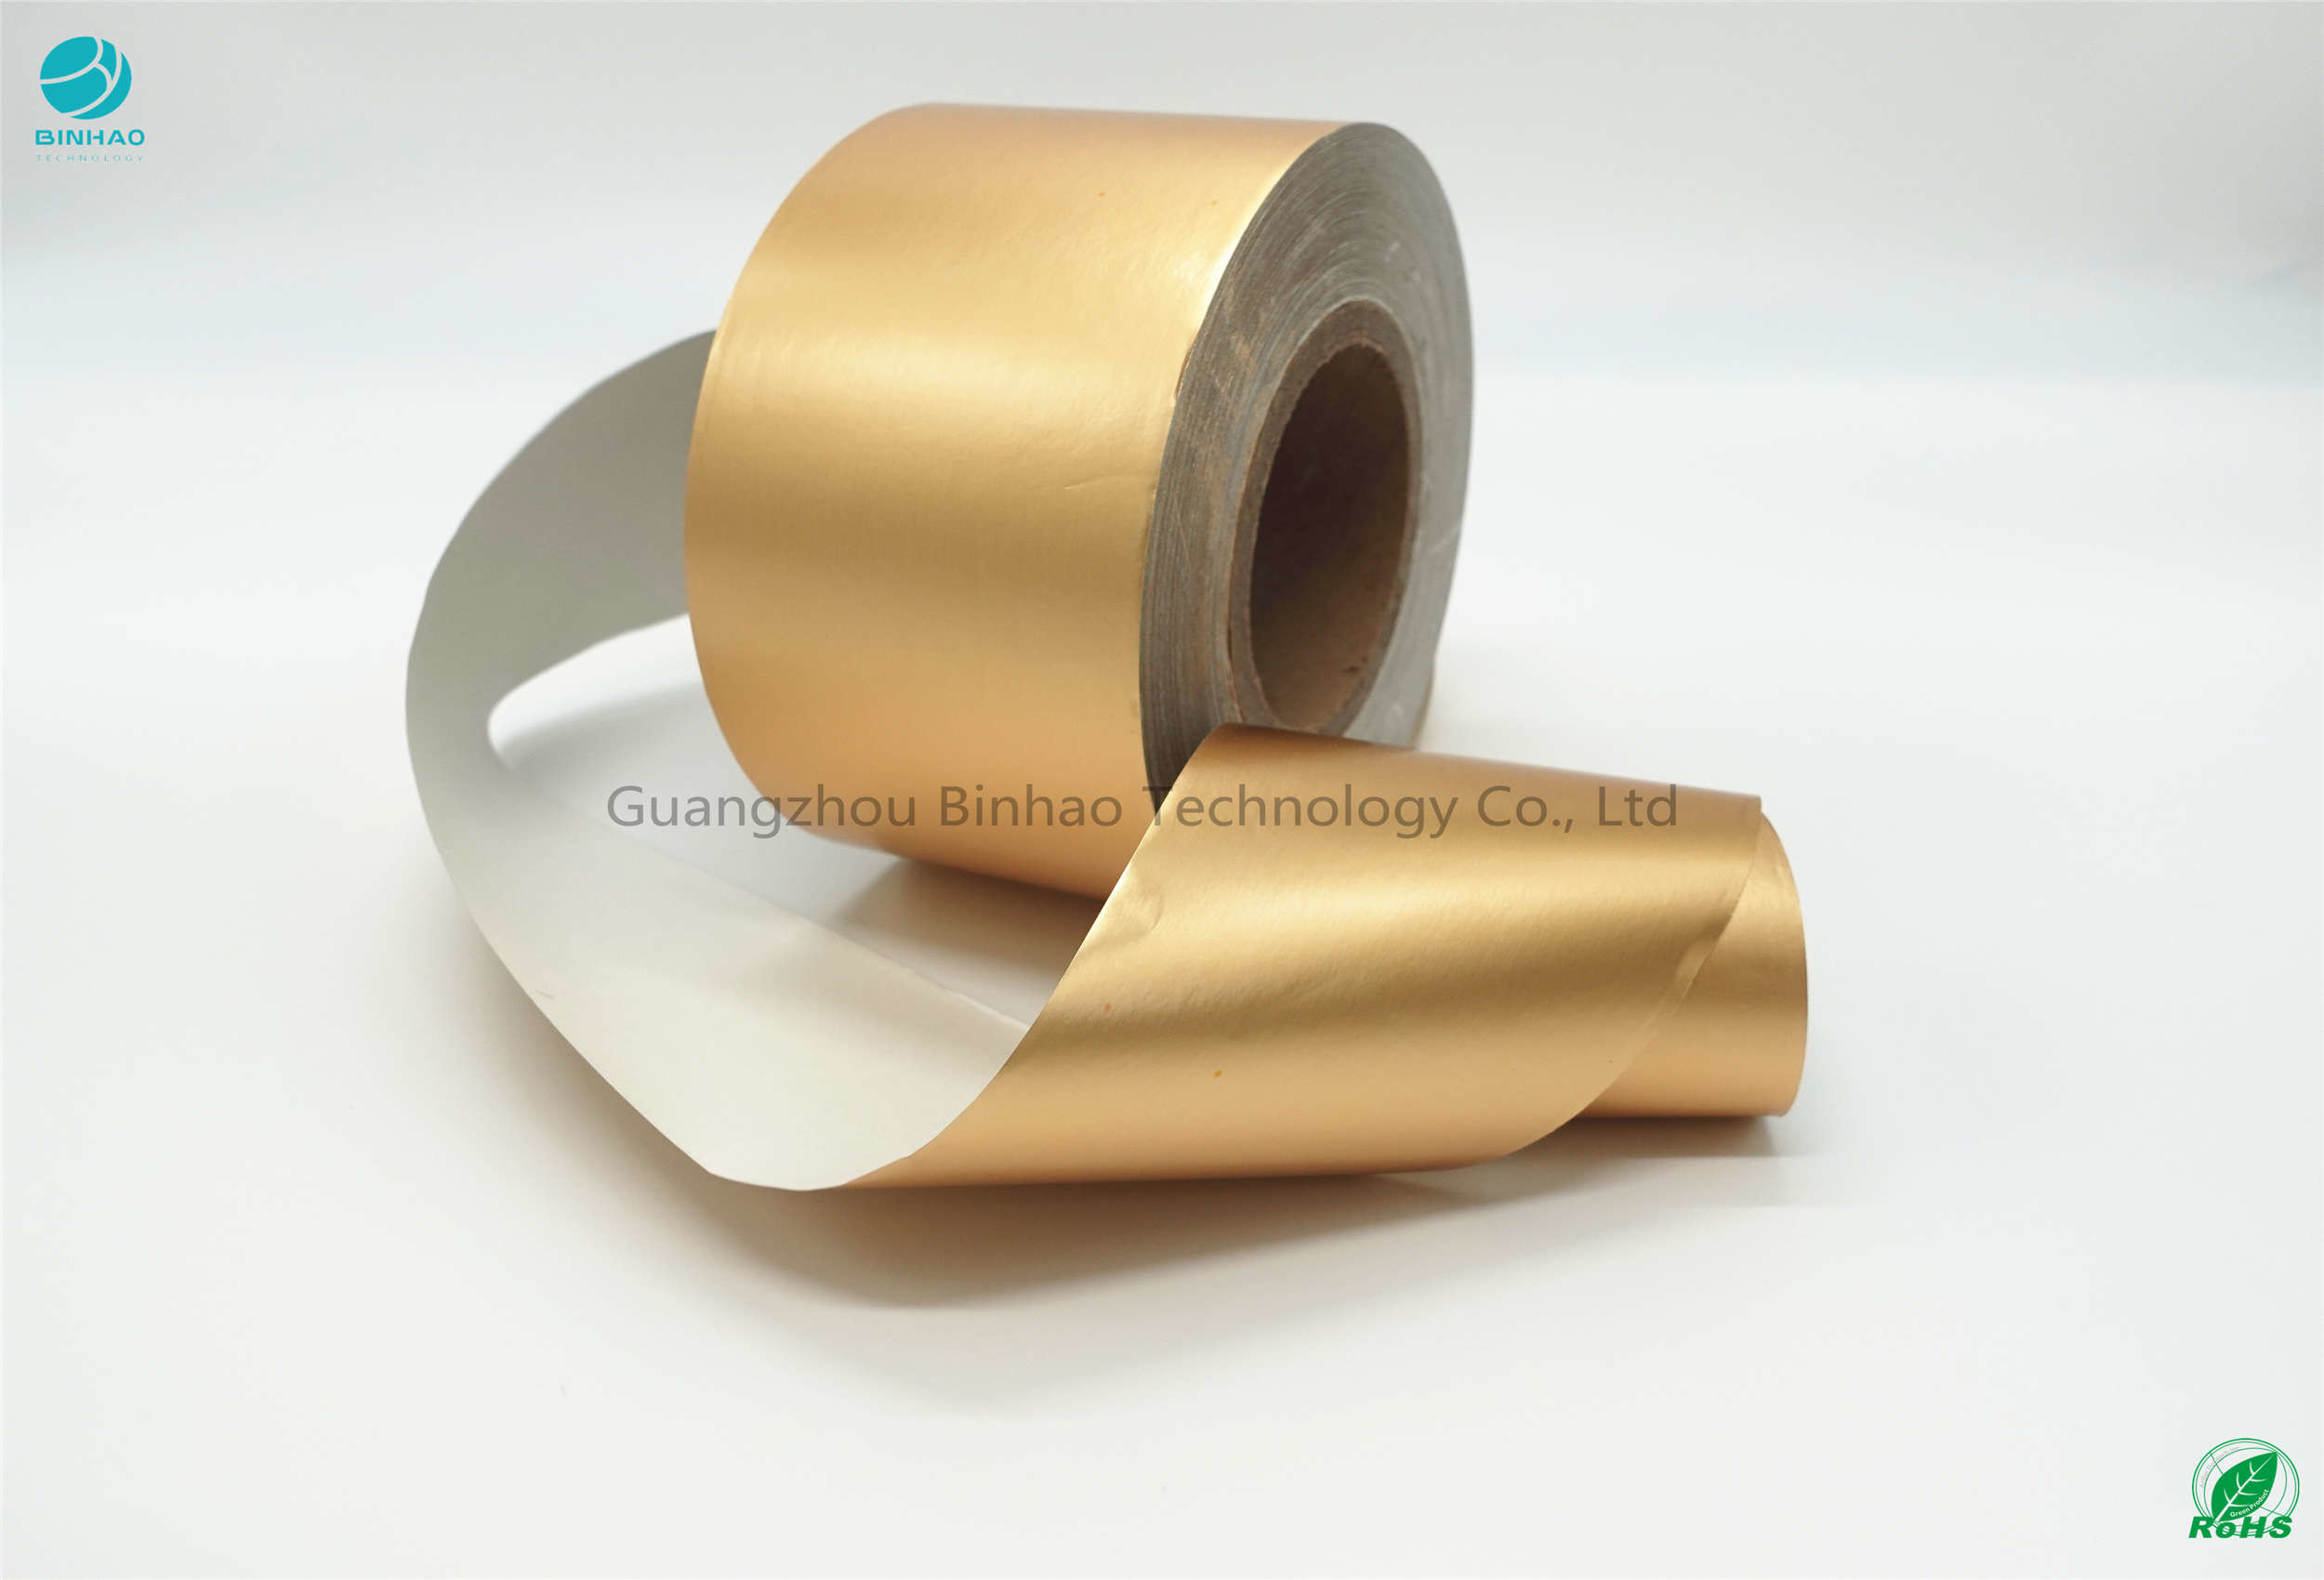 Vergoldendes Aluminiumfolie-Papier des Goldzigaretten-Satz-58gsm 76mm